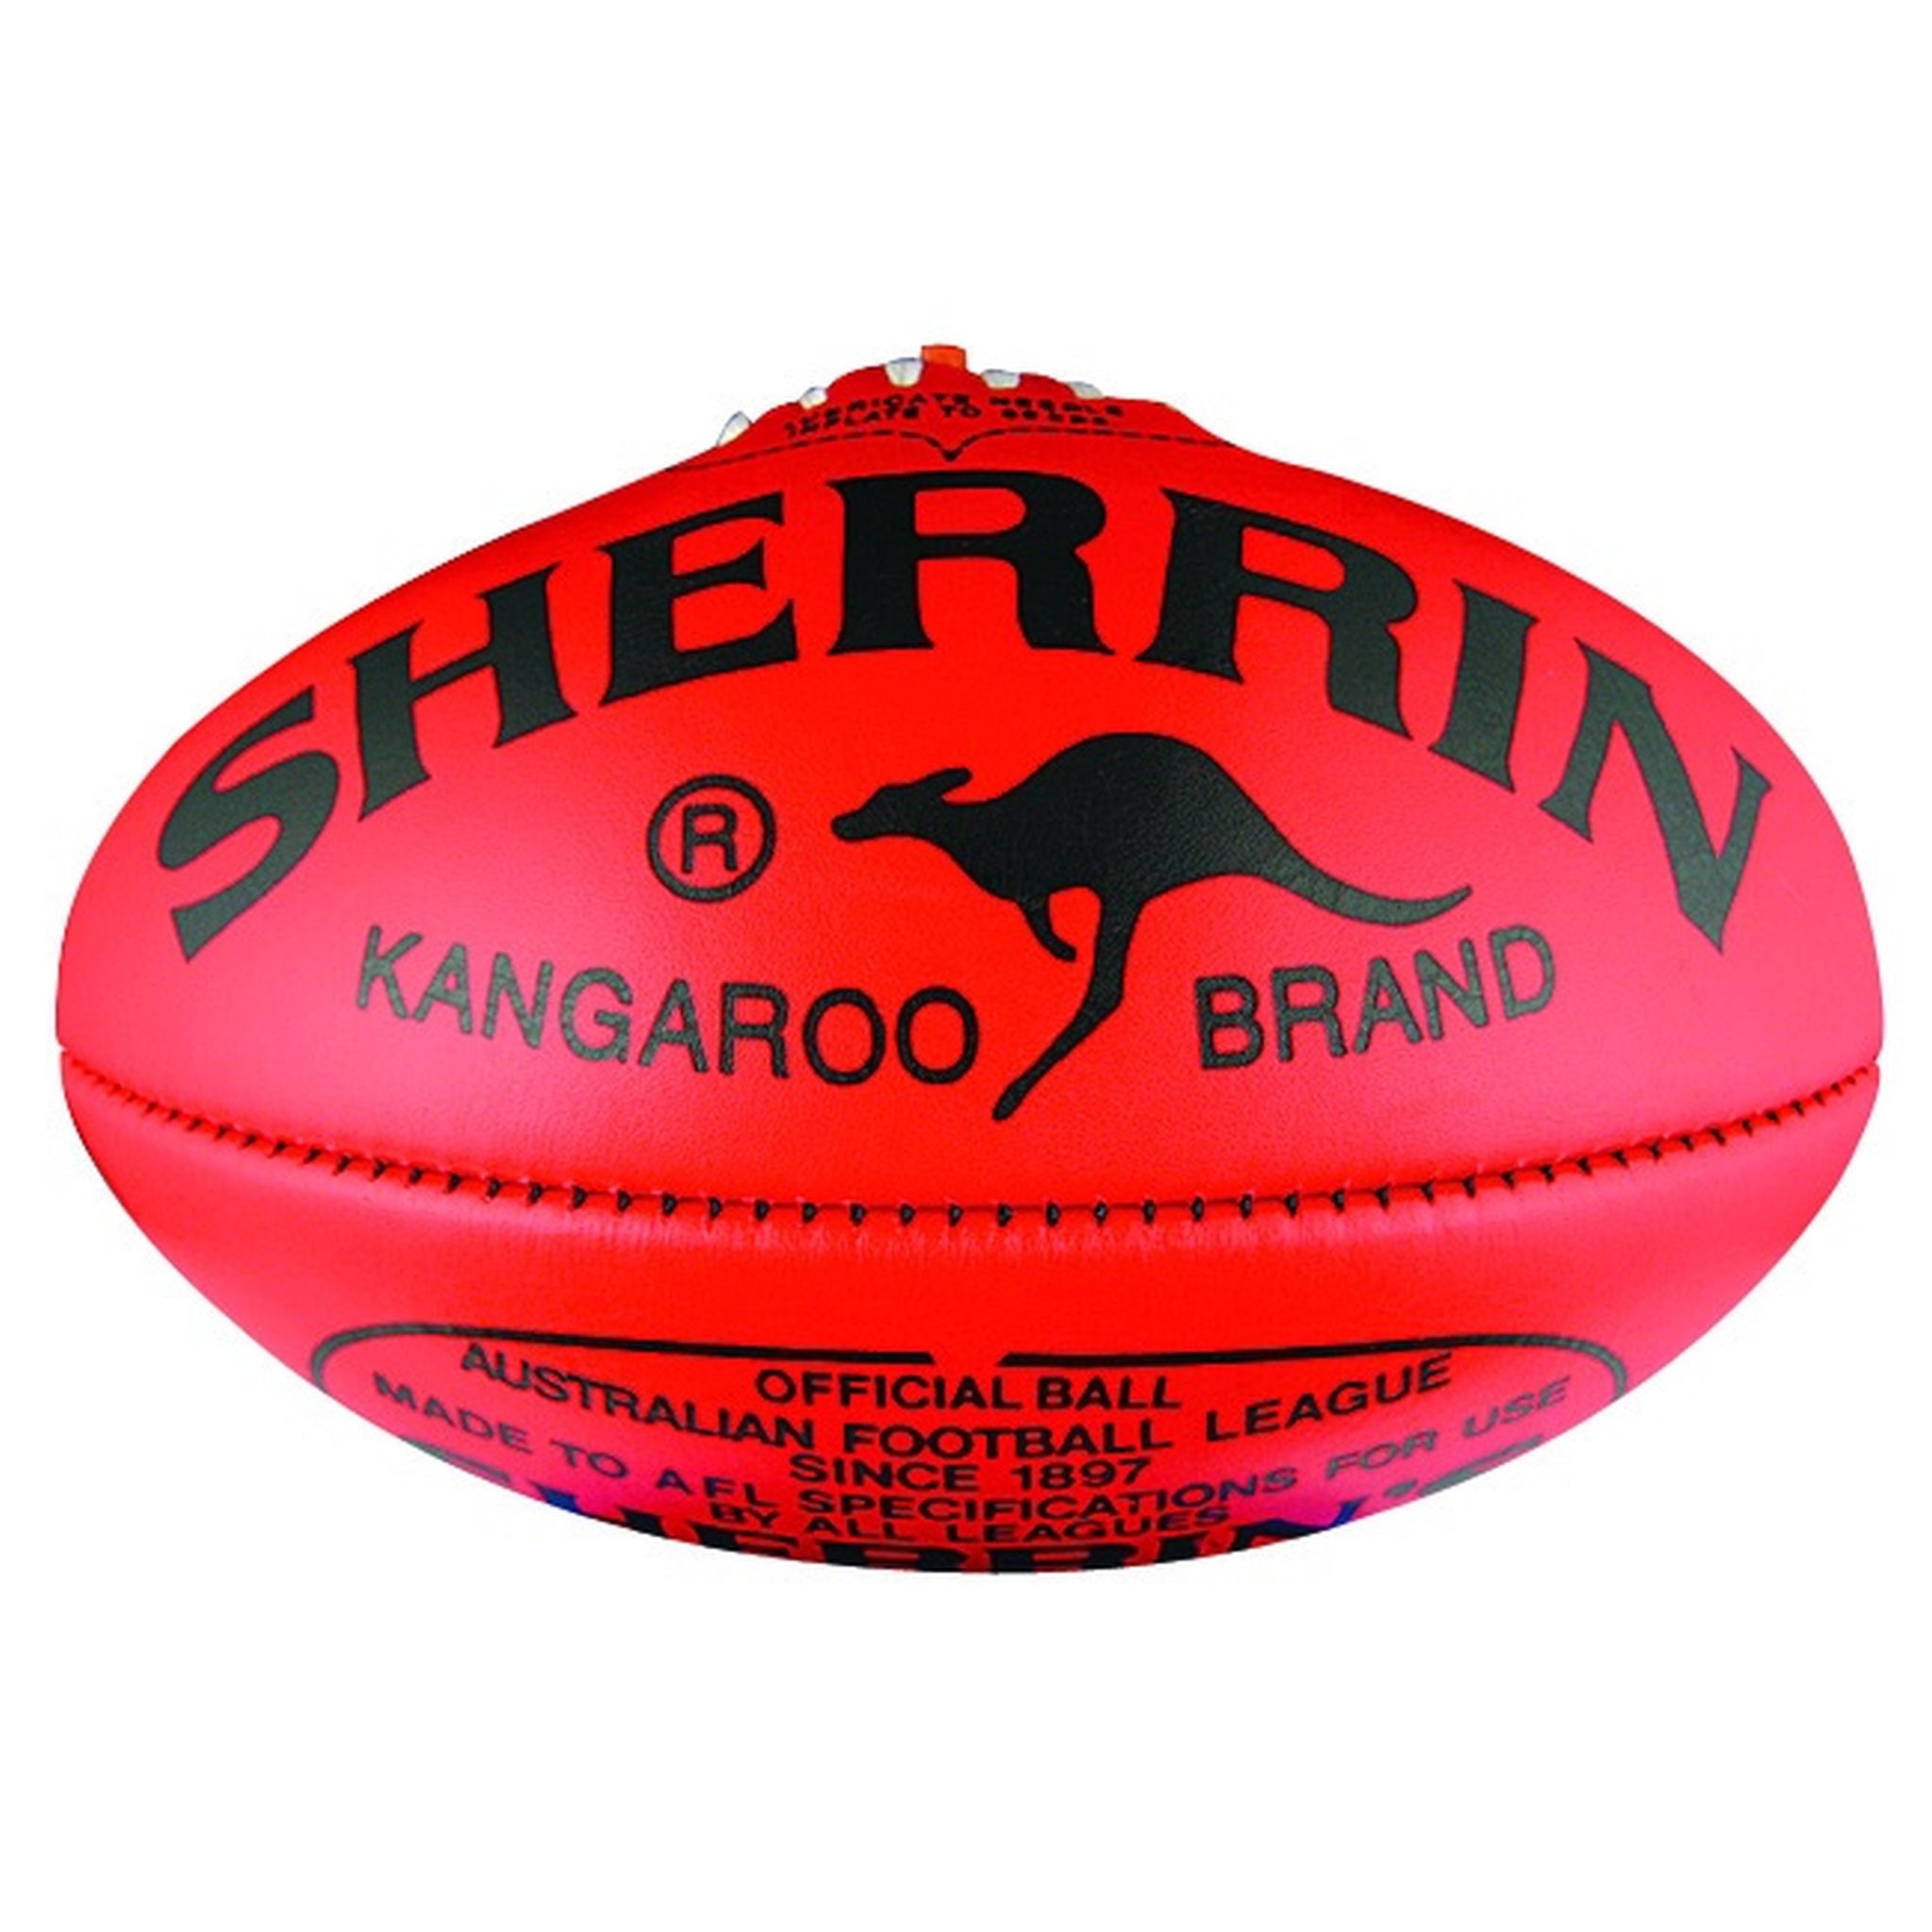 Sherrin KB Football Red - Size 5